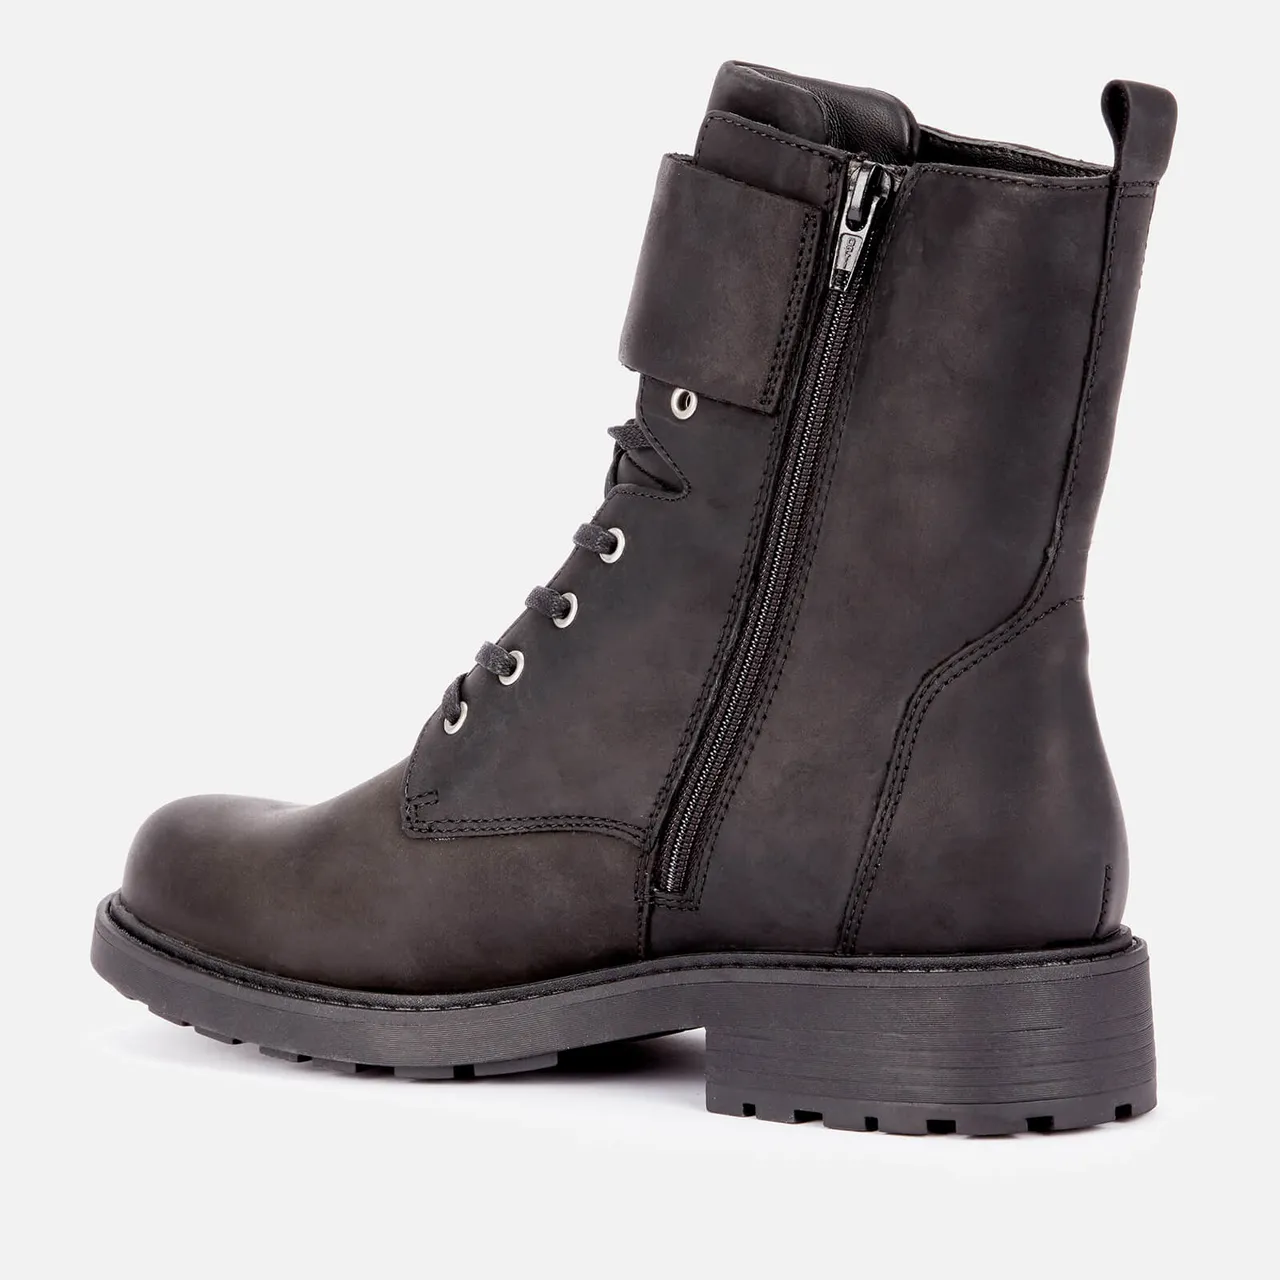 Clarks Women's Orinoco 2 Leather Lace Up Boots - Black - UK